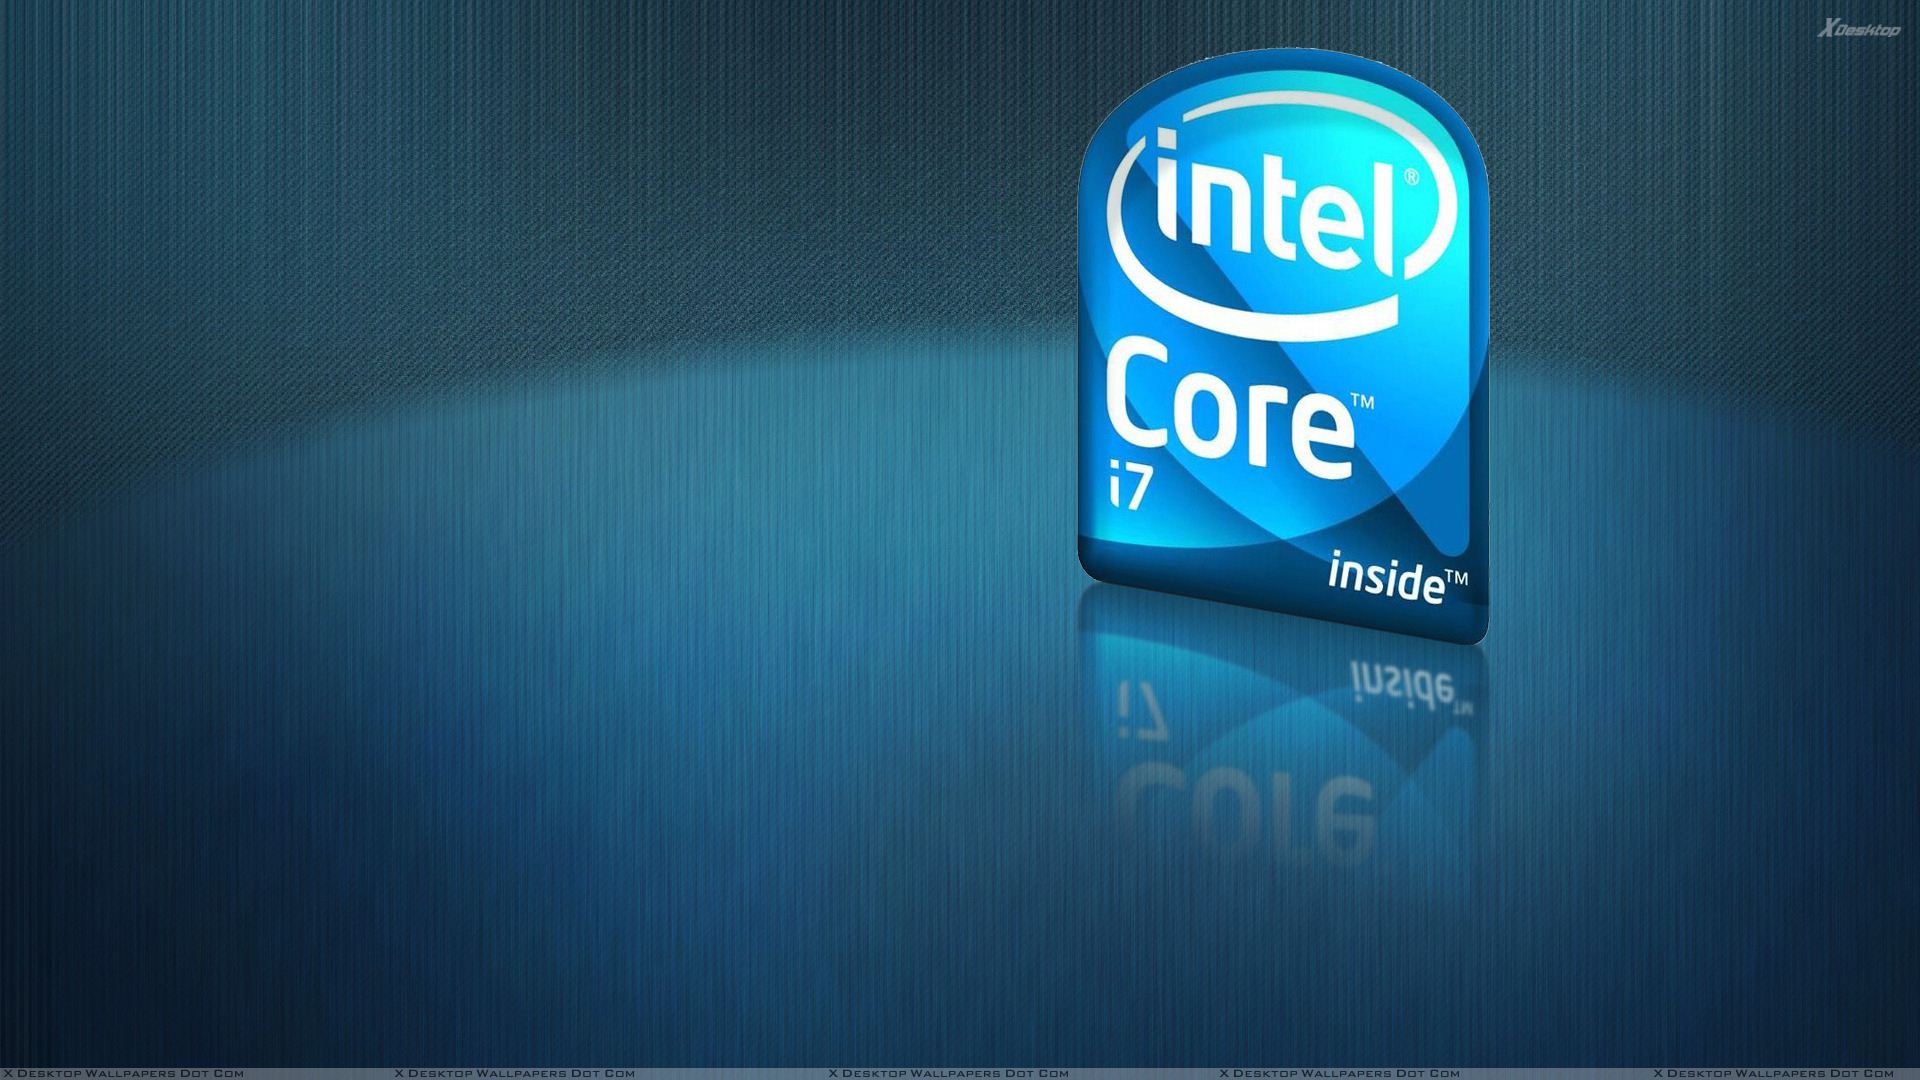 Intel Core i7 Logo And Blue Background